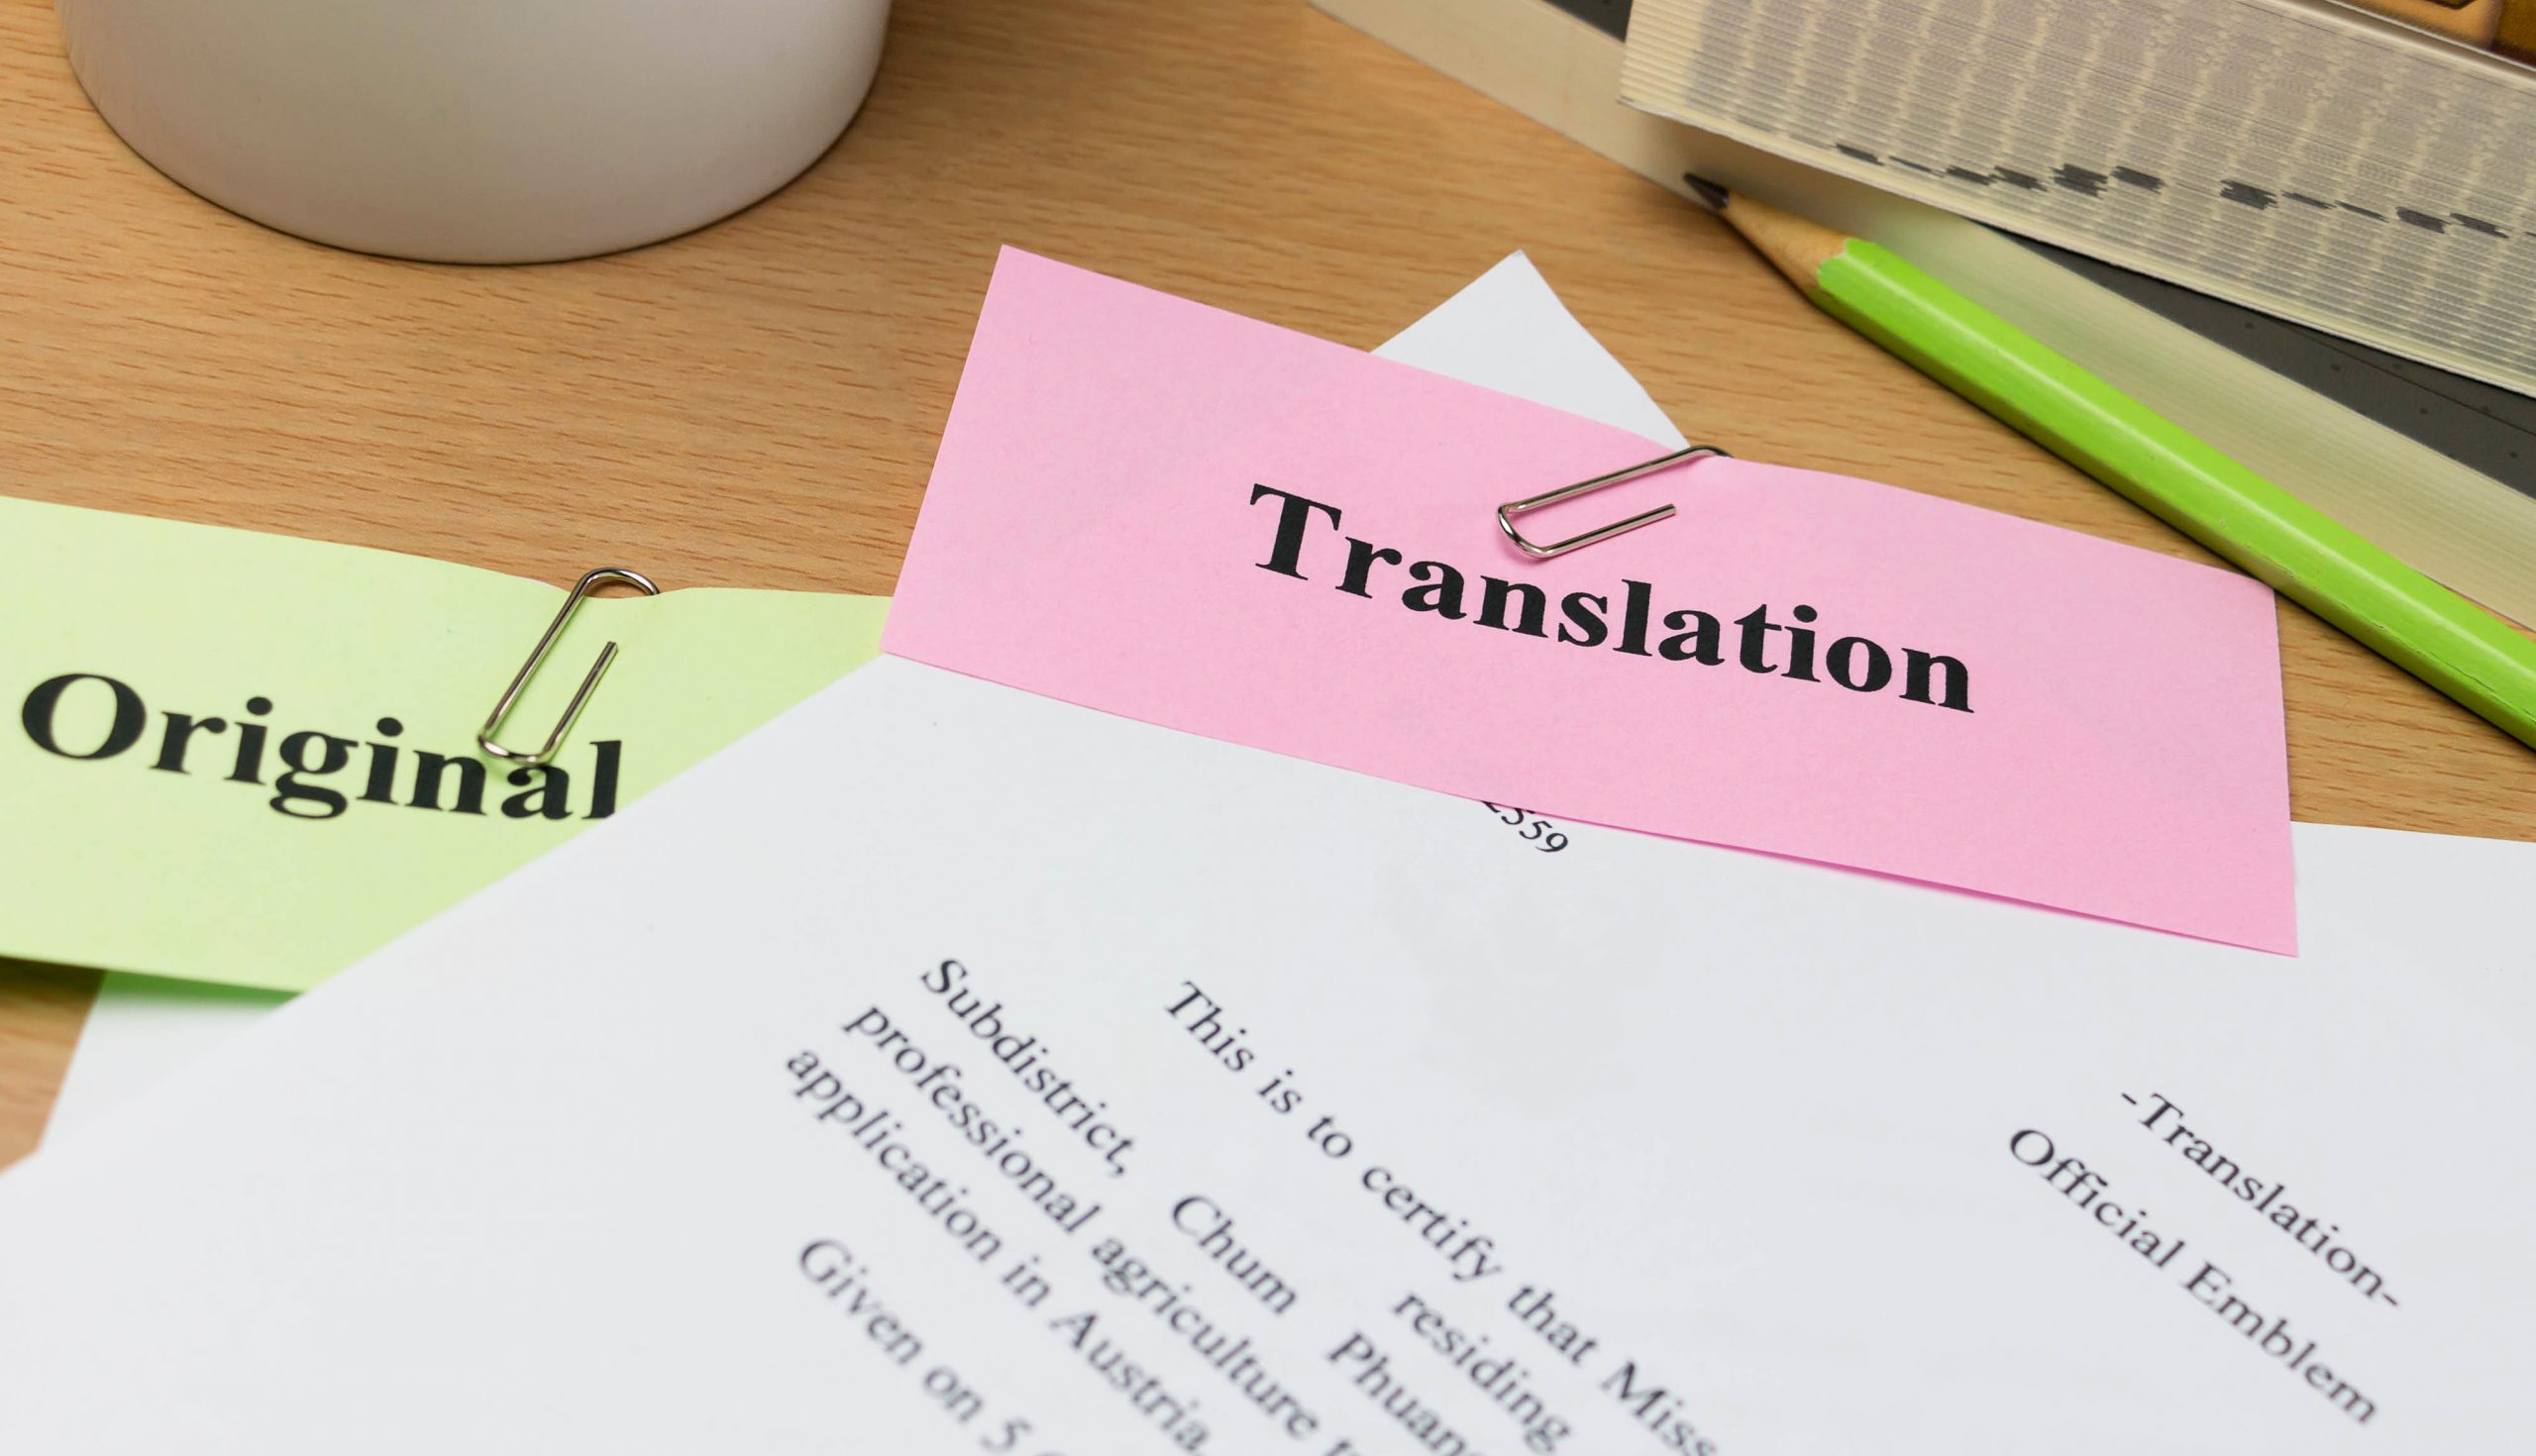 Document Translation now available in the Language Studio - Microsoft Translator Blog